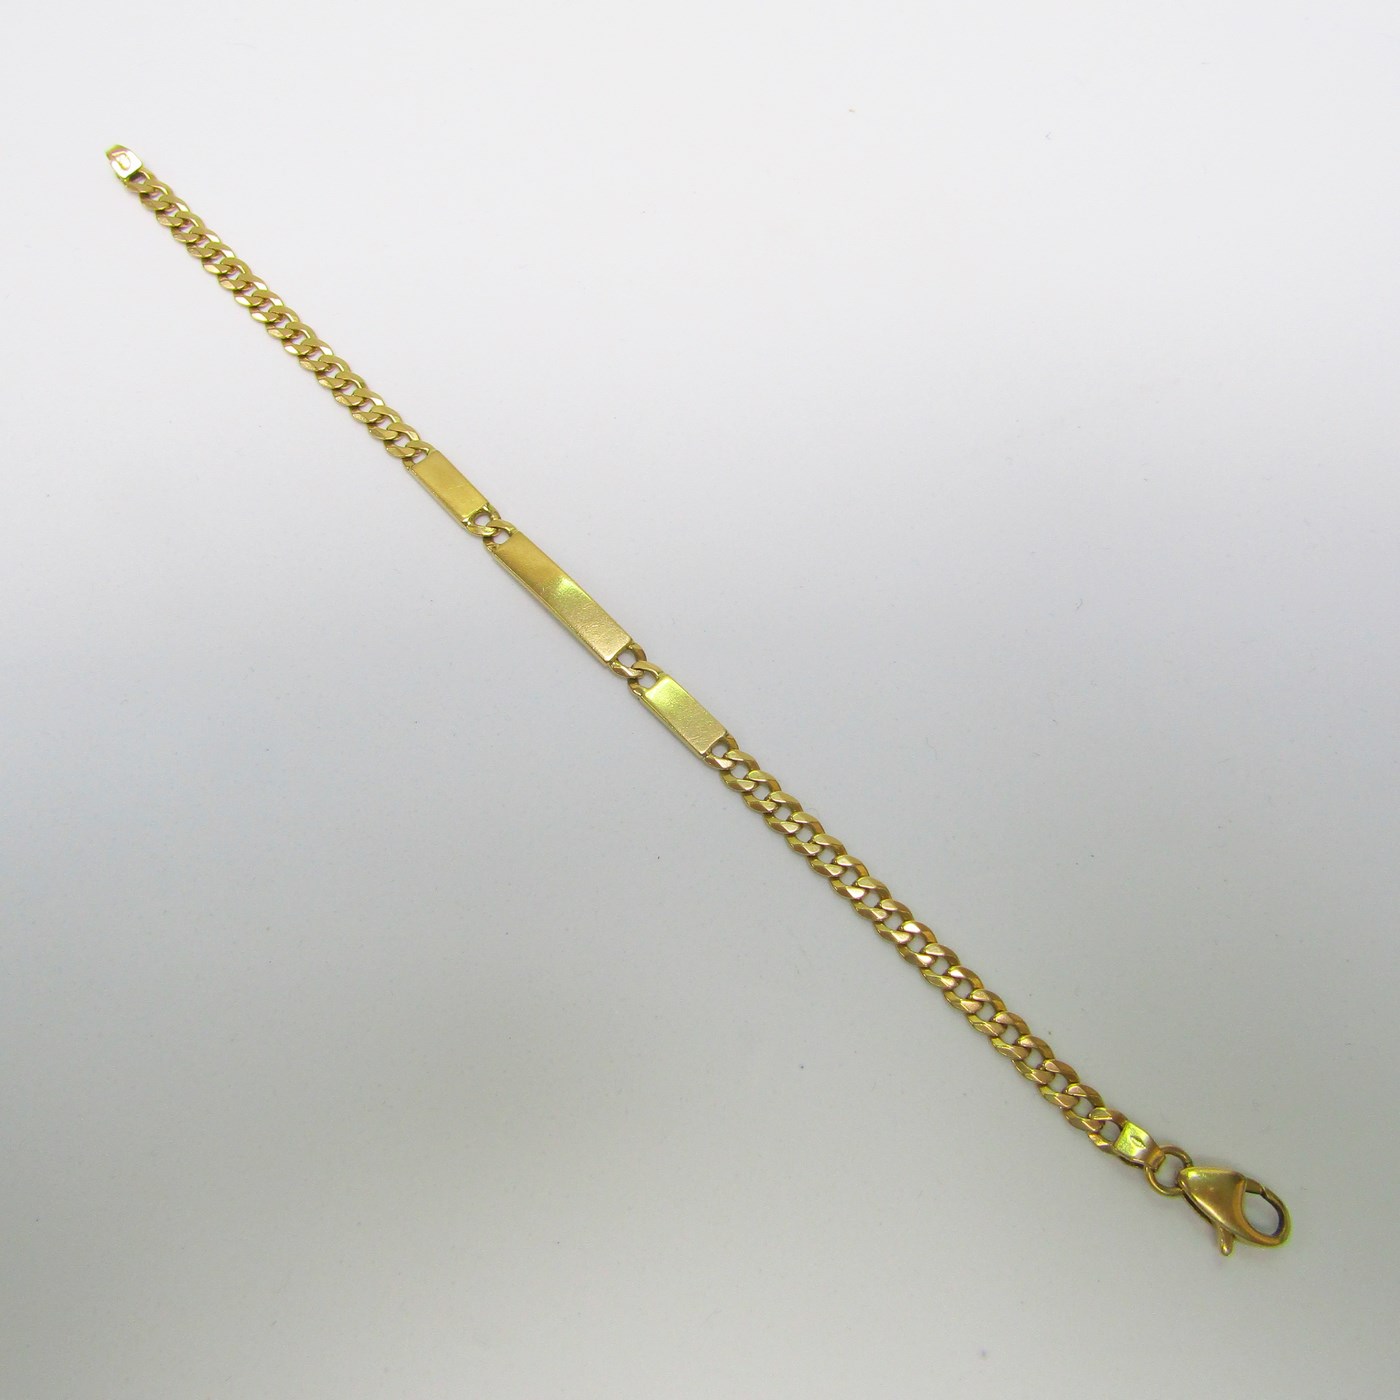 1 Gram Gold Forming 3 Line Triangle Nawabi Funky Design Bracelet - Style  C326 at Rs 3860.00 | Rajkot| ID: 2849507601030